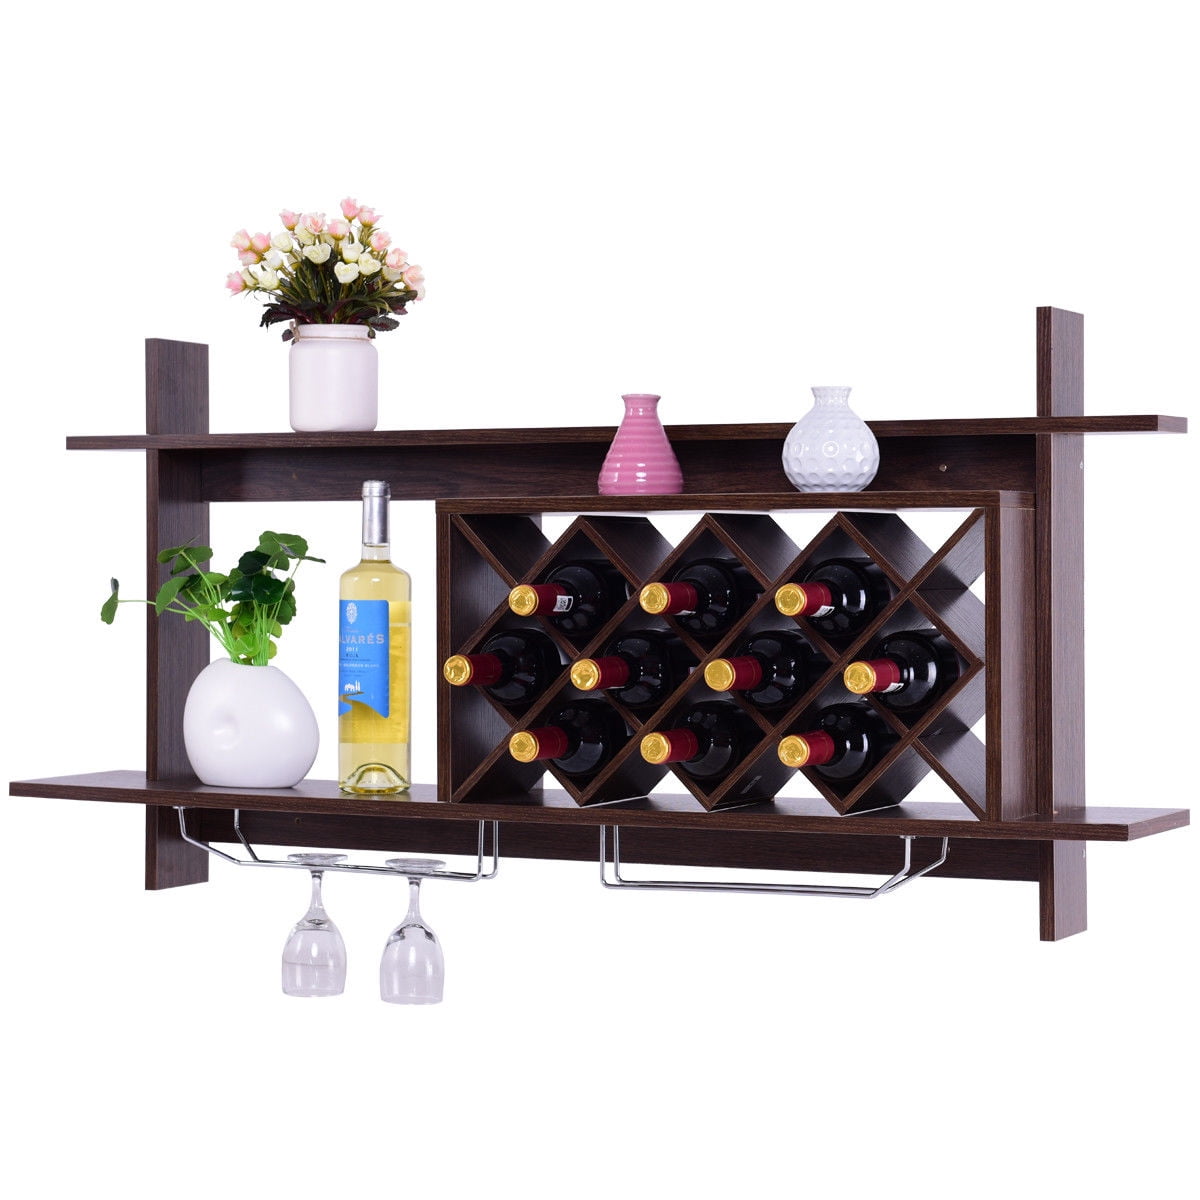 Kitchen Drinks Bar Accessories Home Wall Mounted Shelf Wine Rack and Glass Holder M&W Bottle Storage Holder Shelf Organiser 